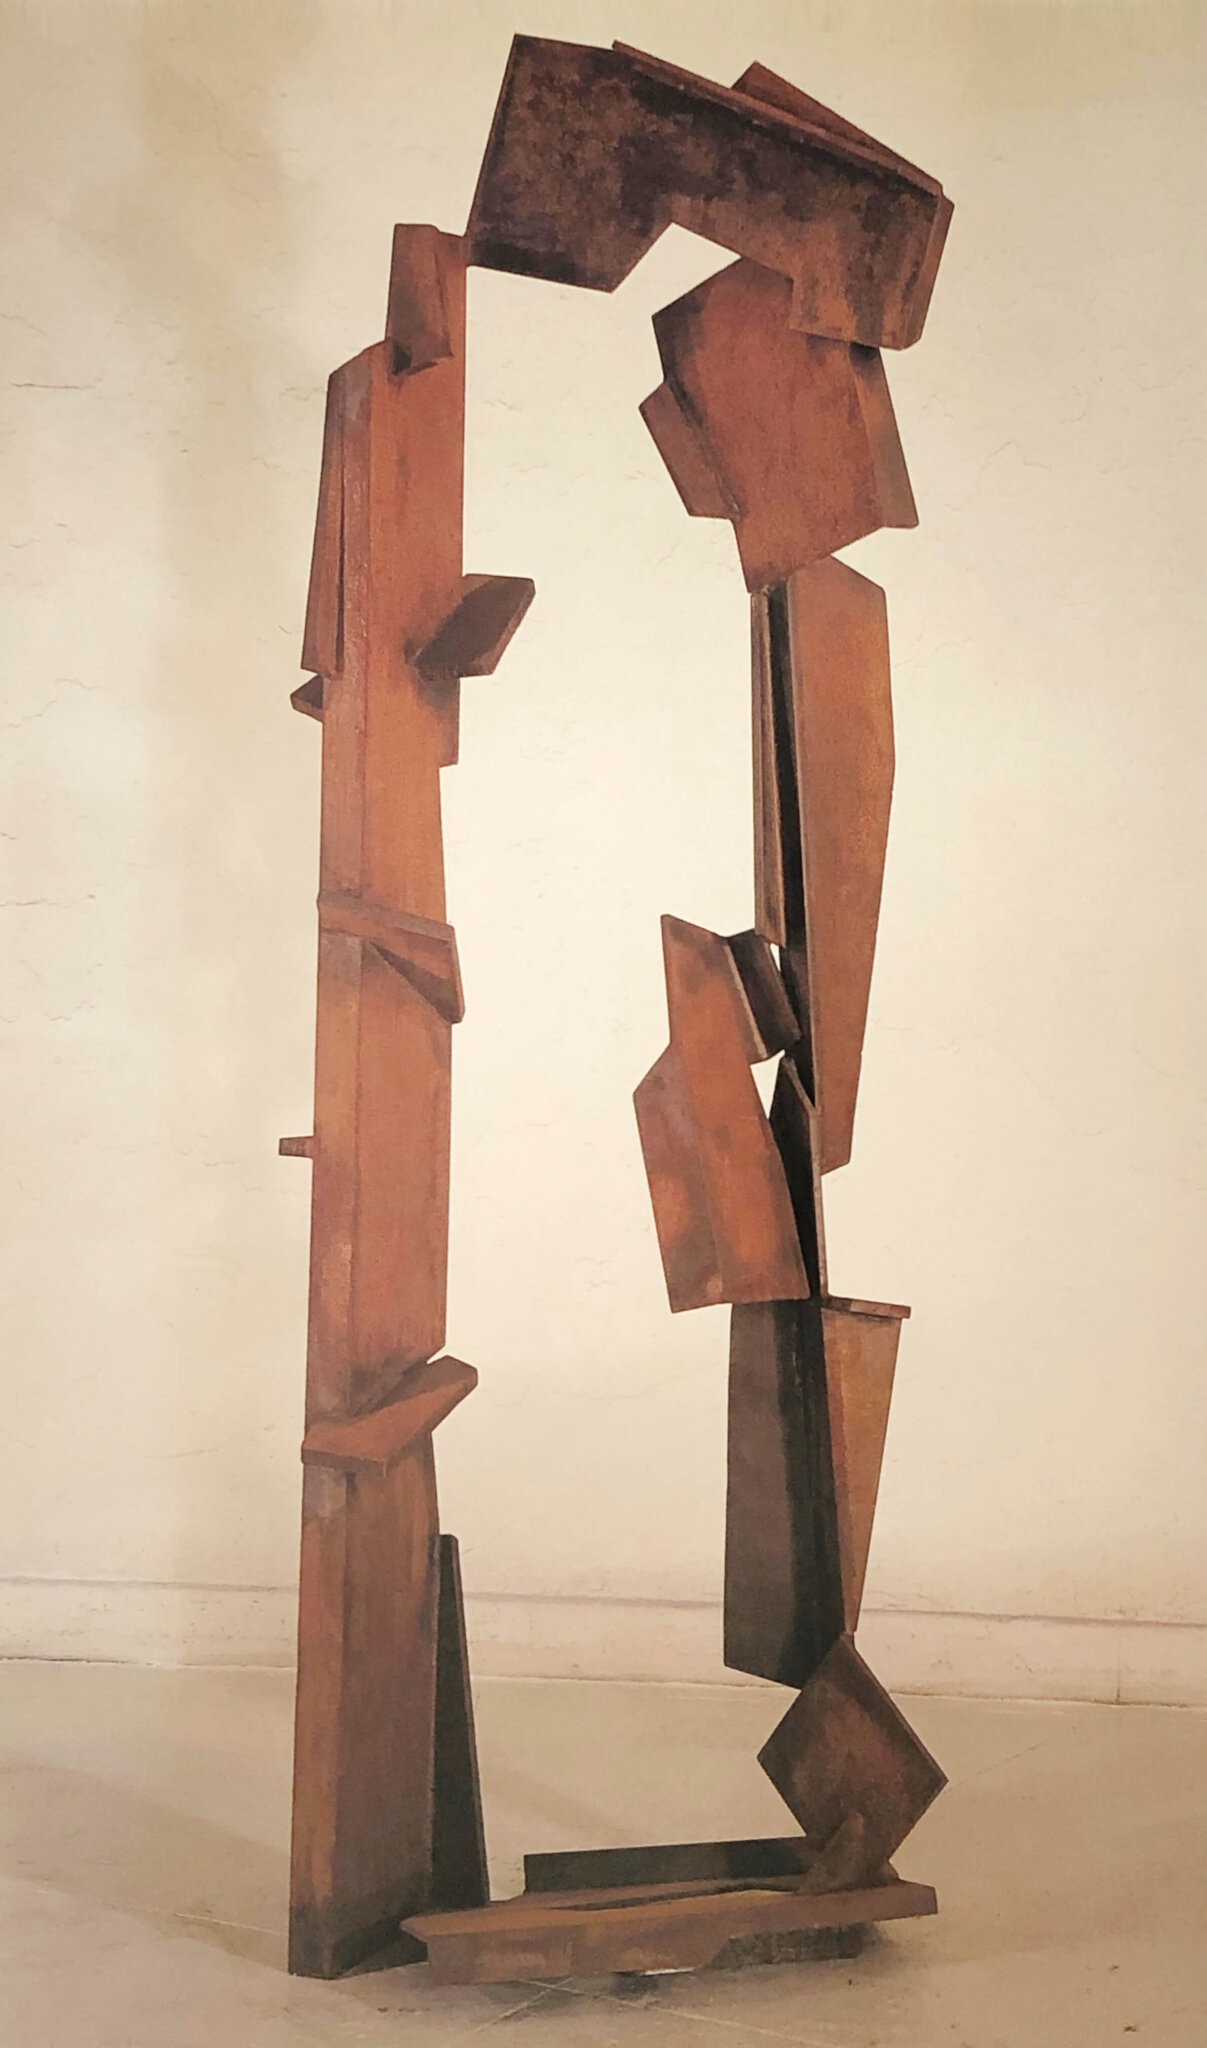 Joel Perlman's "Sky Hawk" sculpture